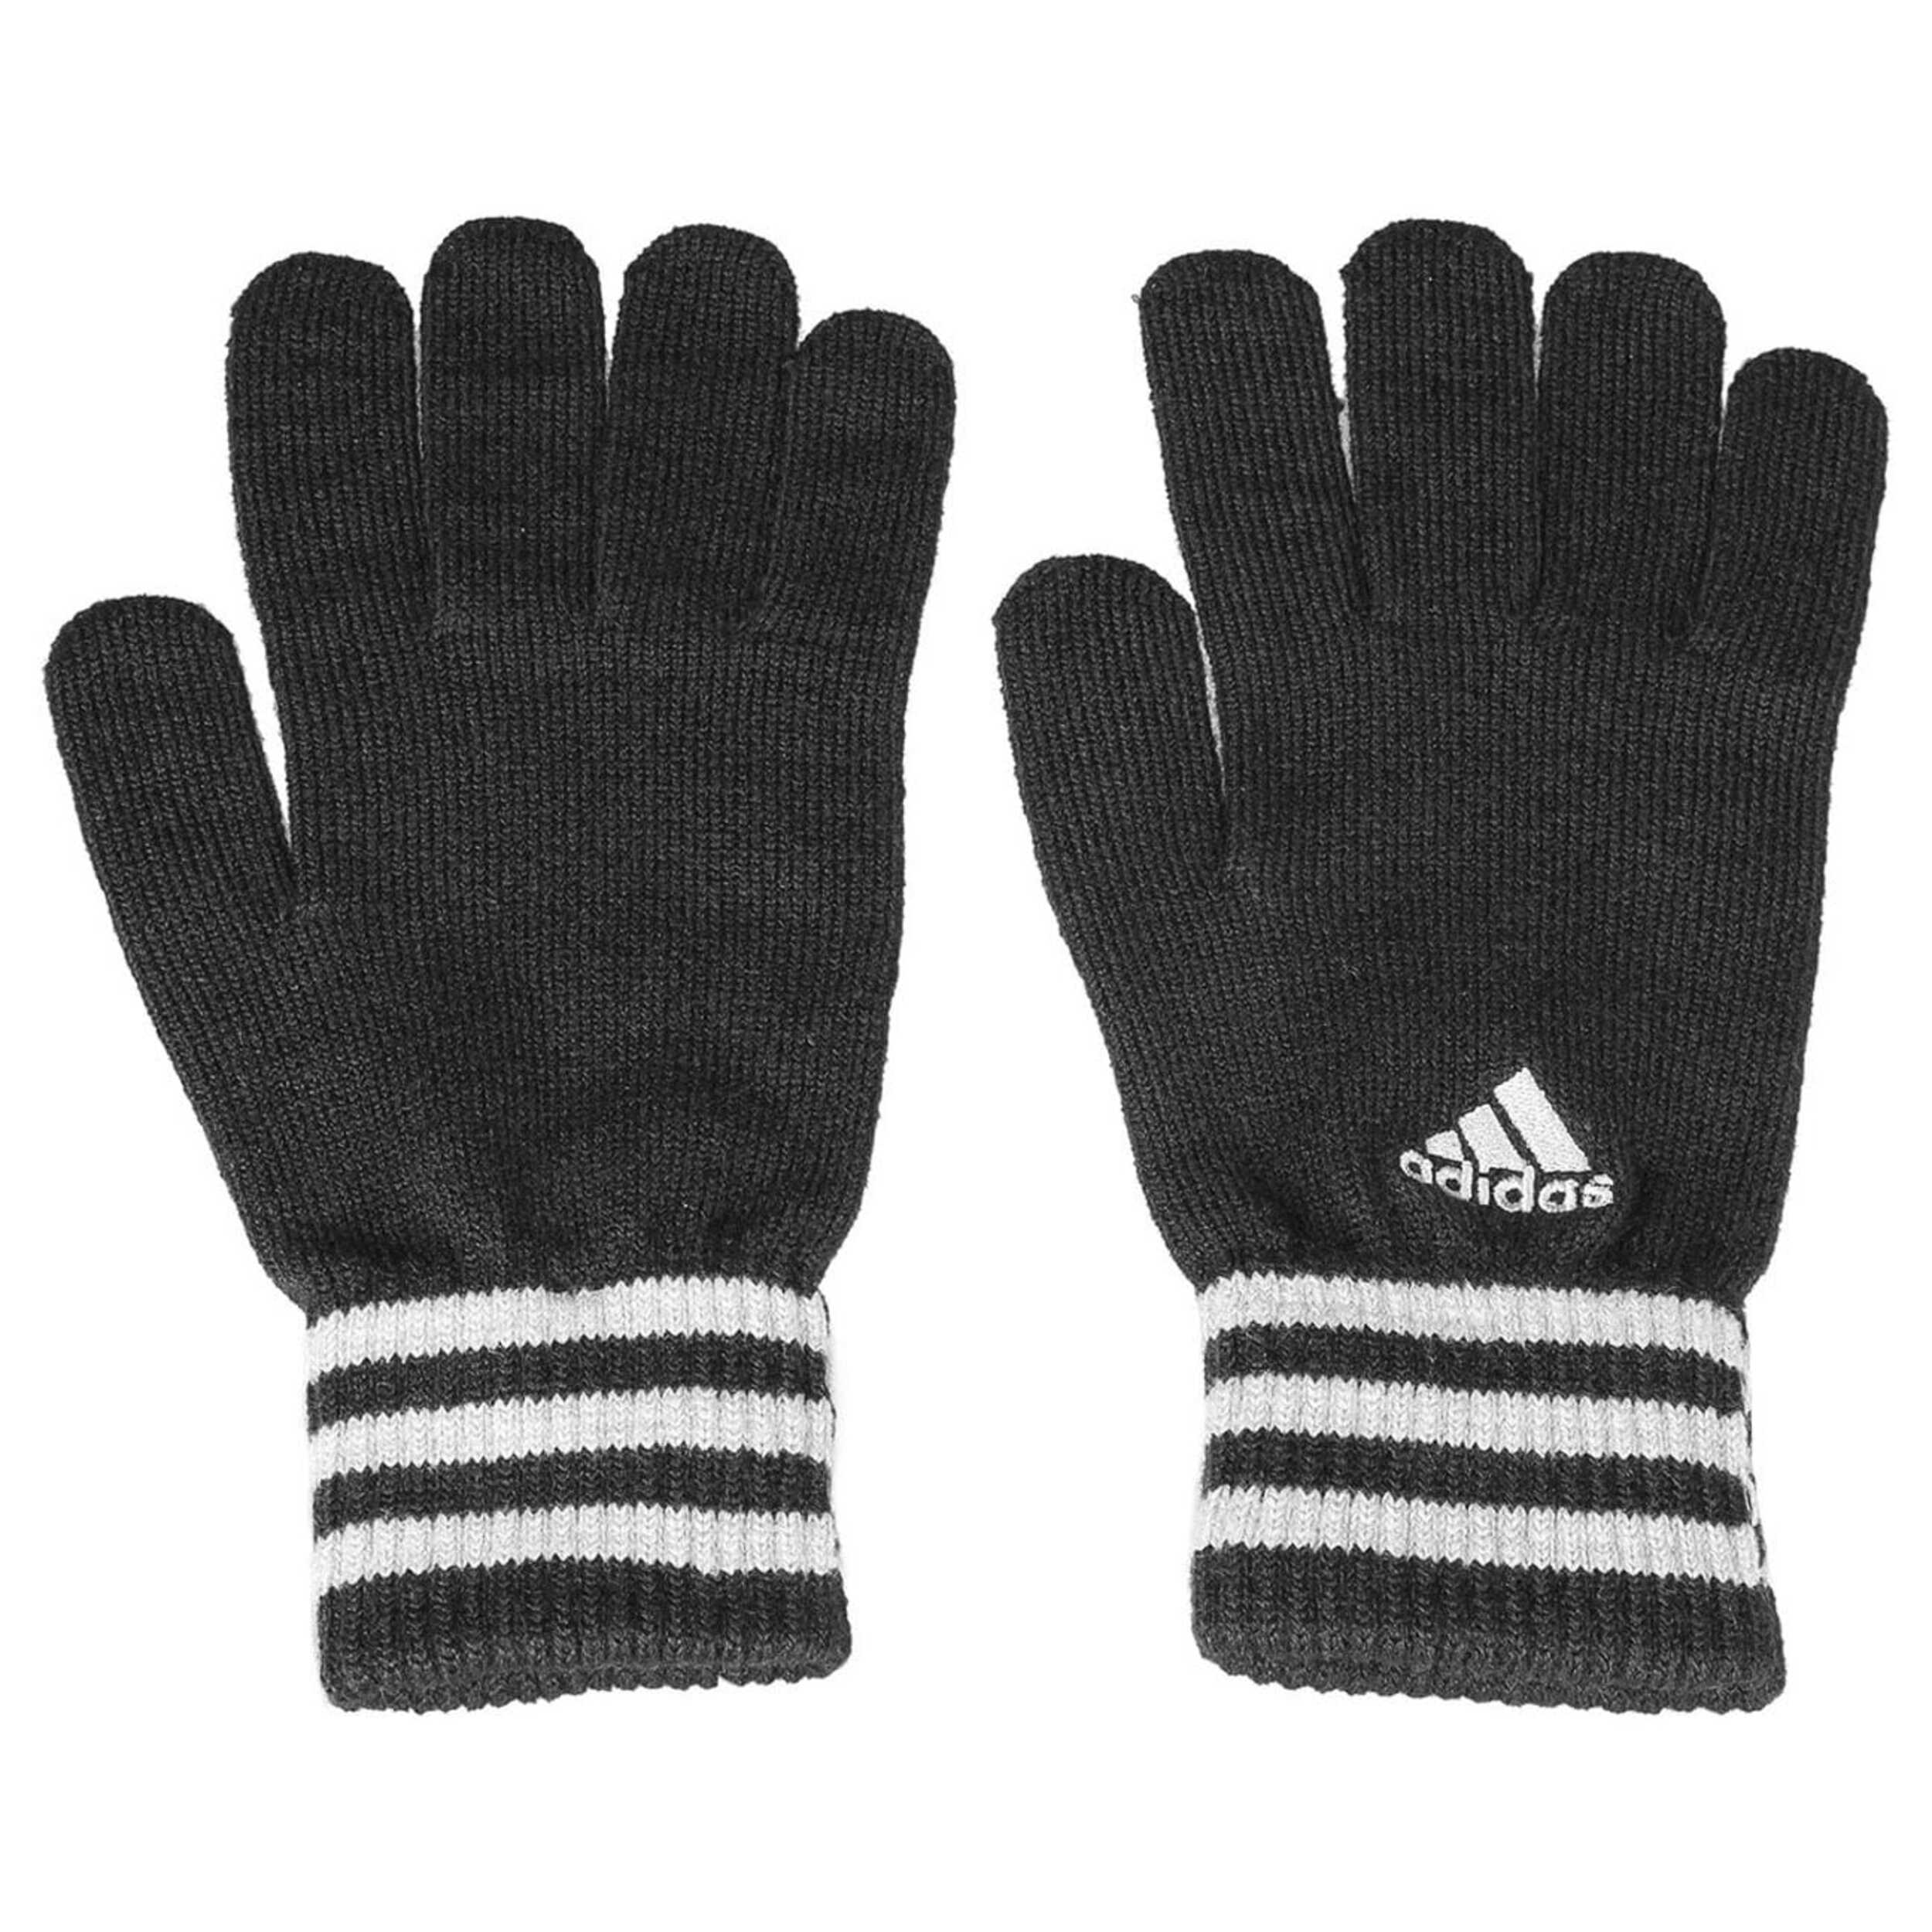 captain america football gloves